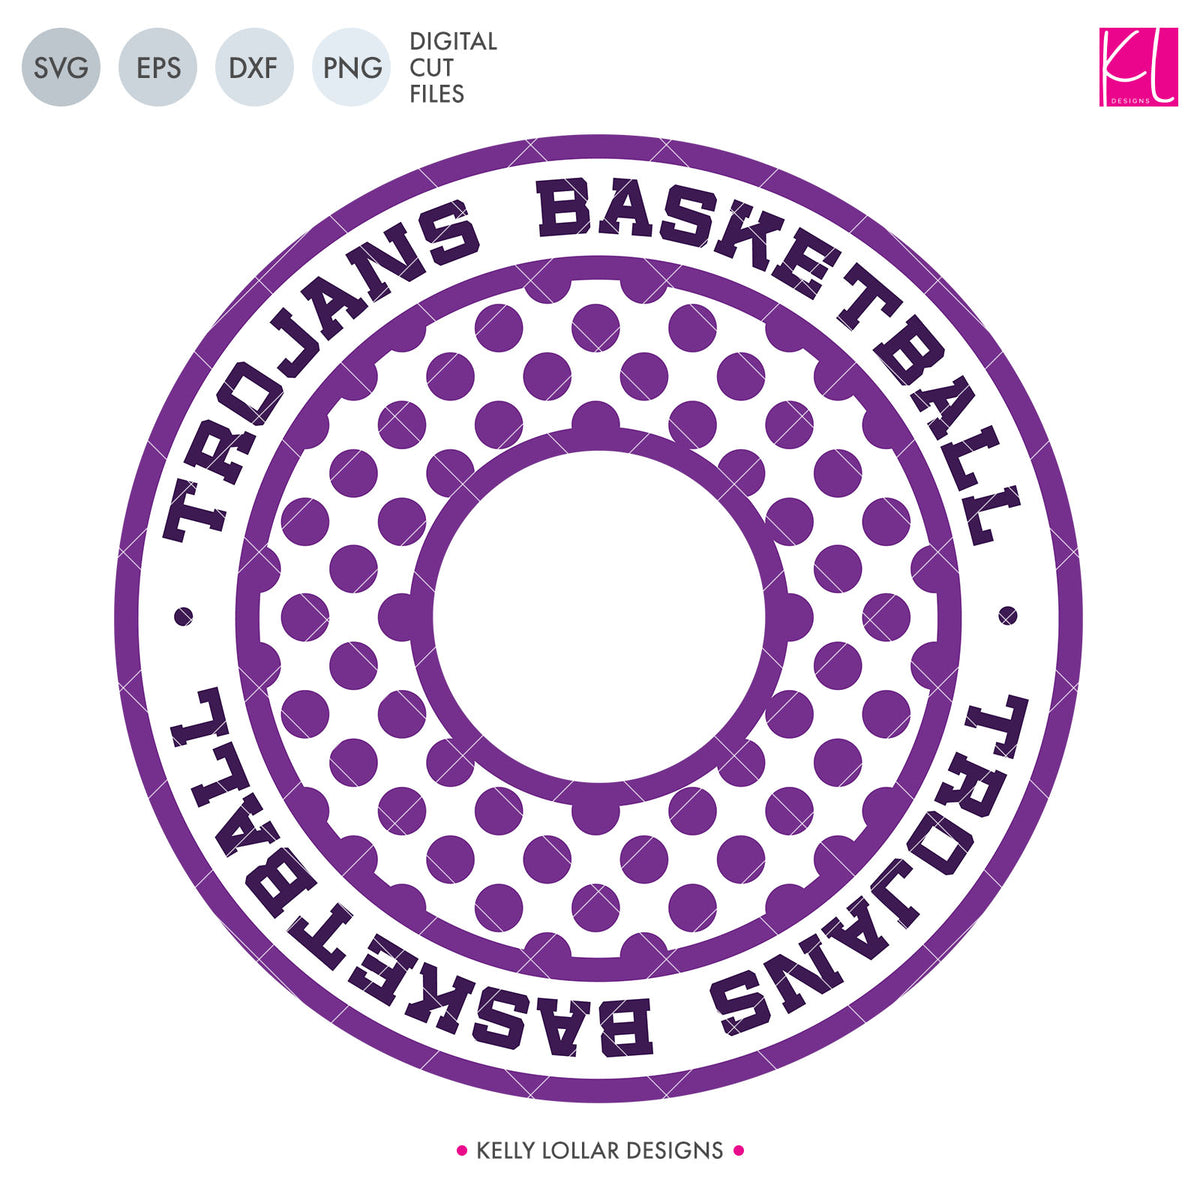 Trojans Basketball Bundle | SVG DXF EPS PNG Cut Files